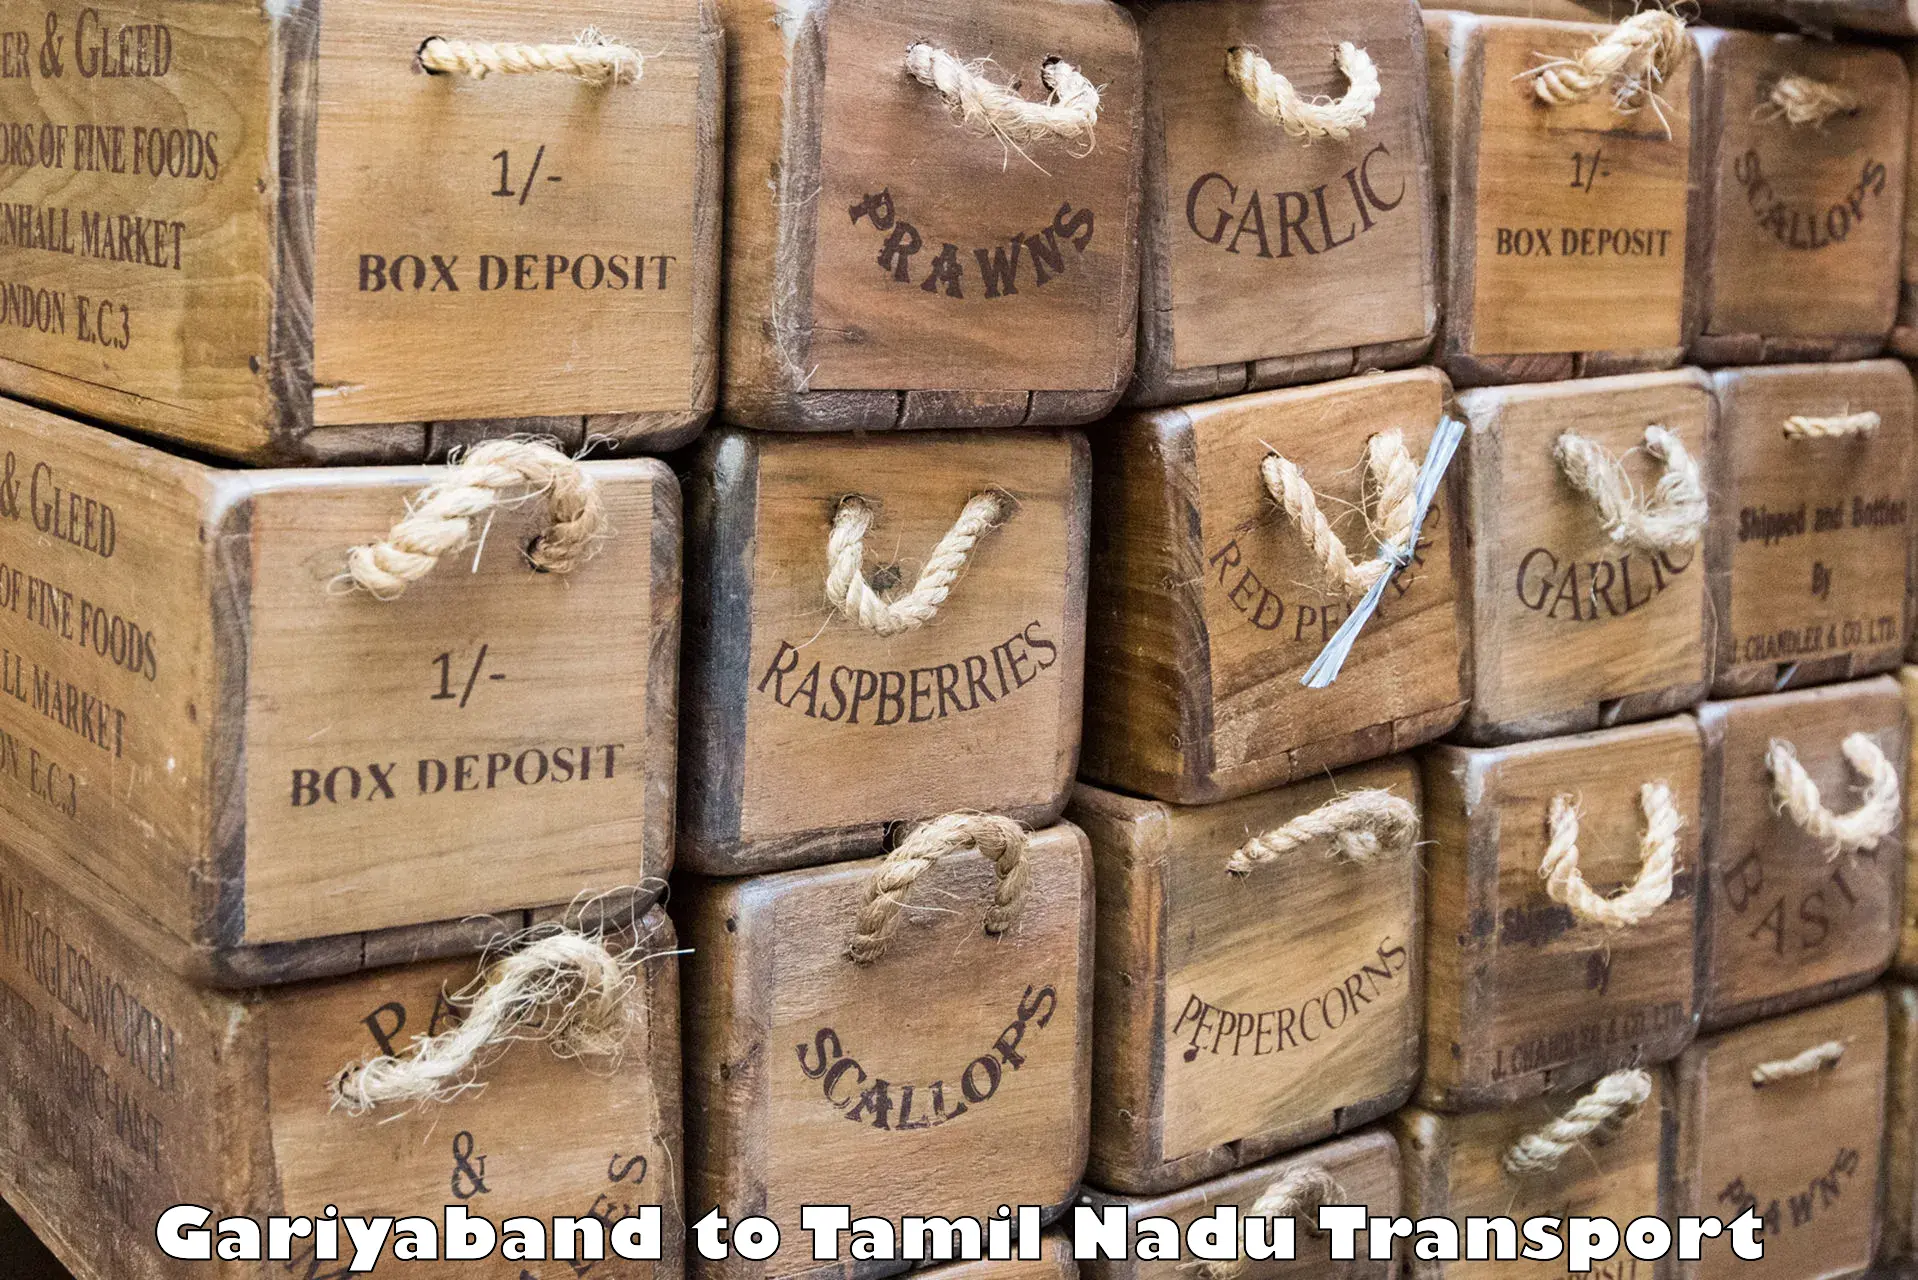 Container transport service Gariyaband to Periyakulam